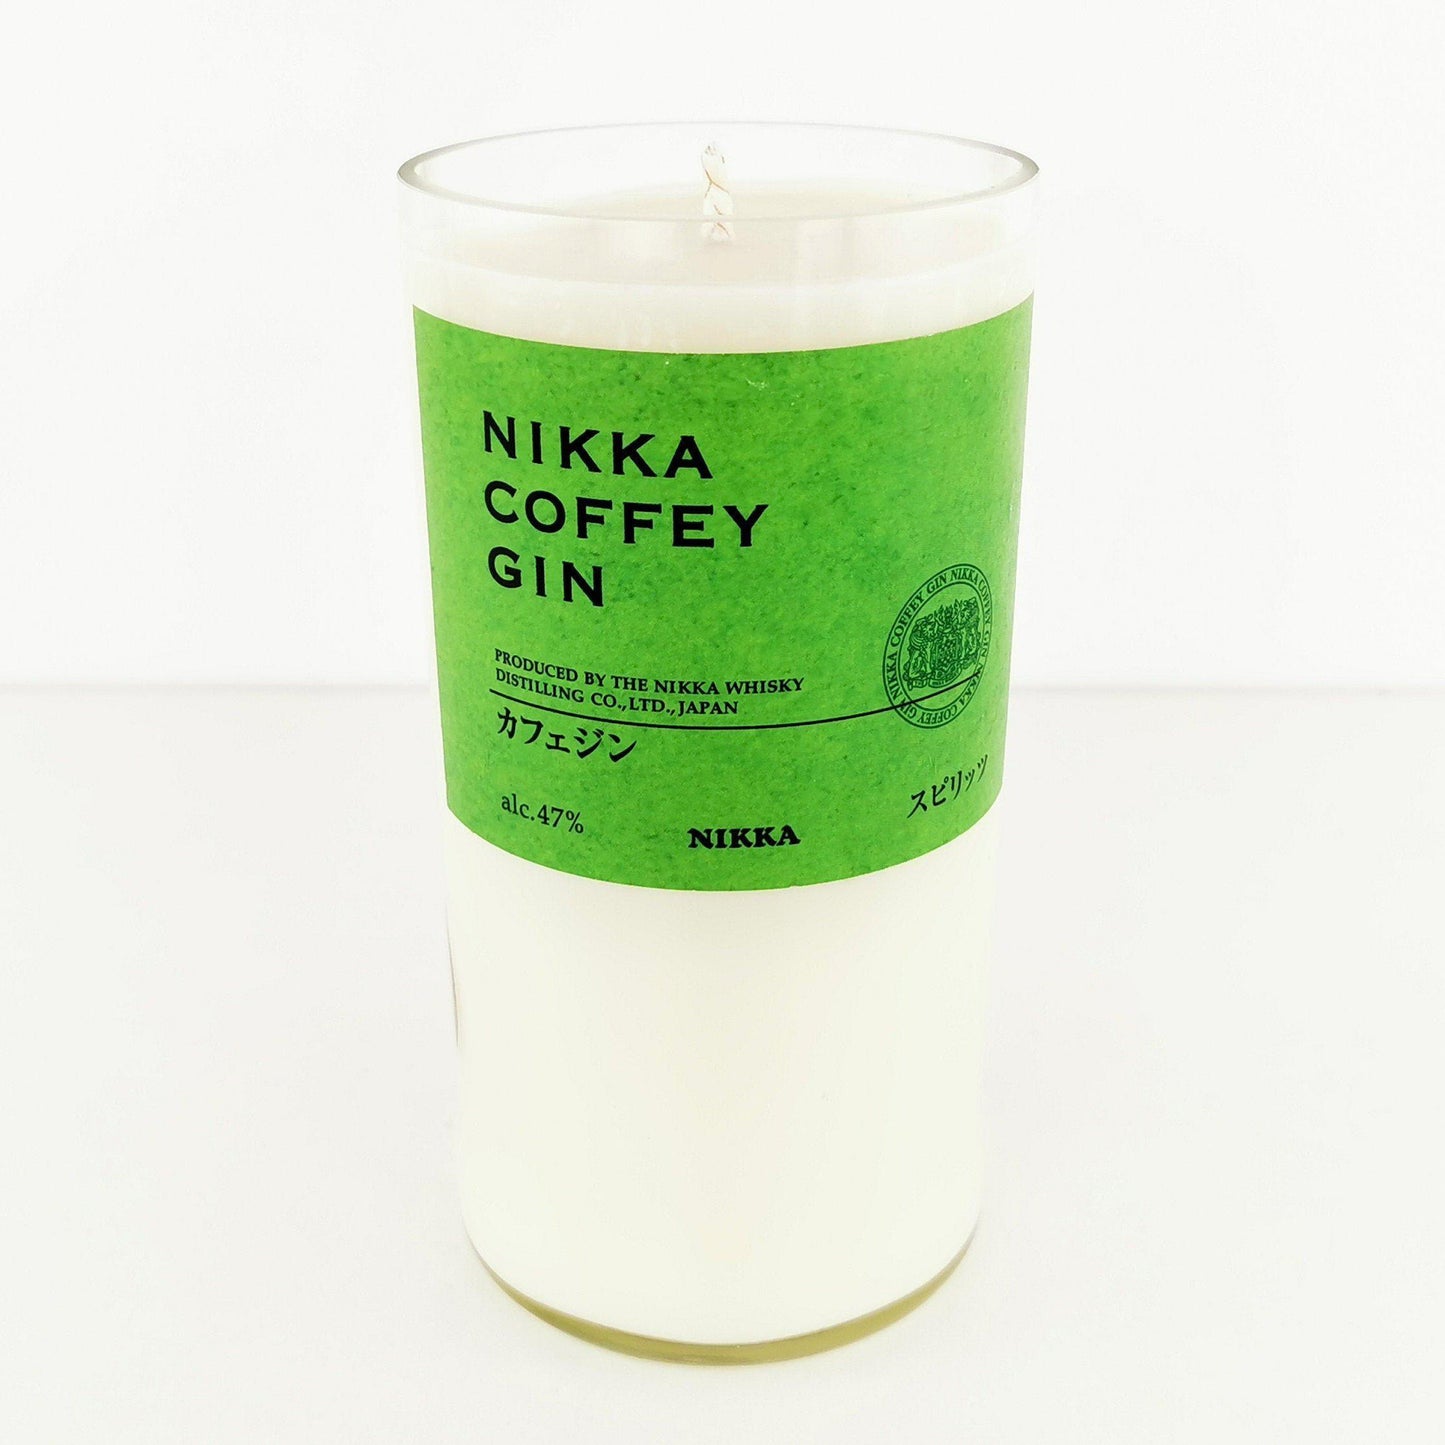 Nikka Coffey Gin Bottle Candle-Gin Bottle Candles-Adhock Homeware